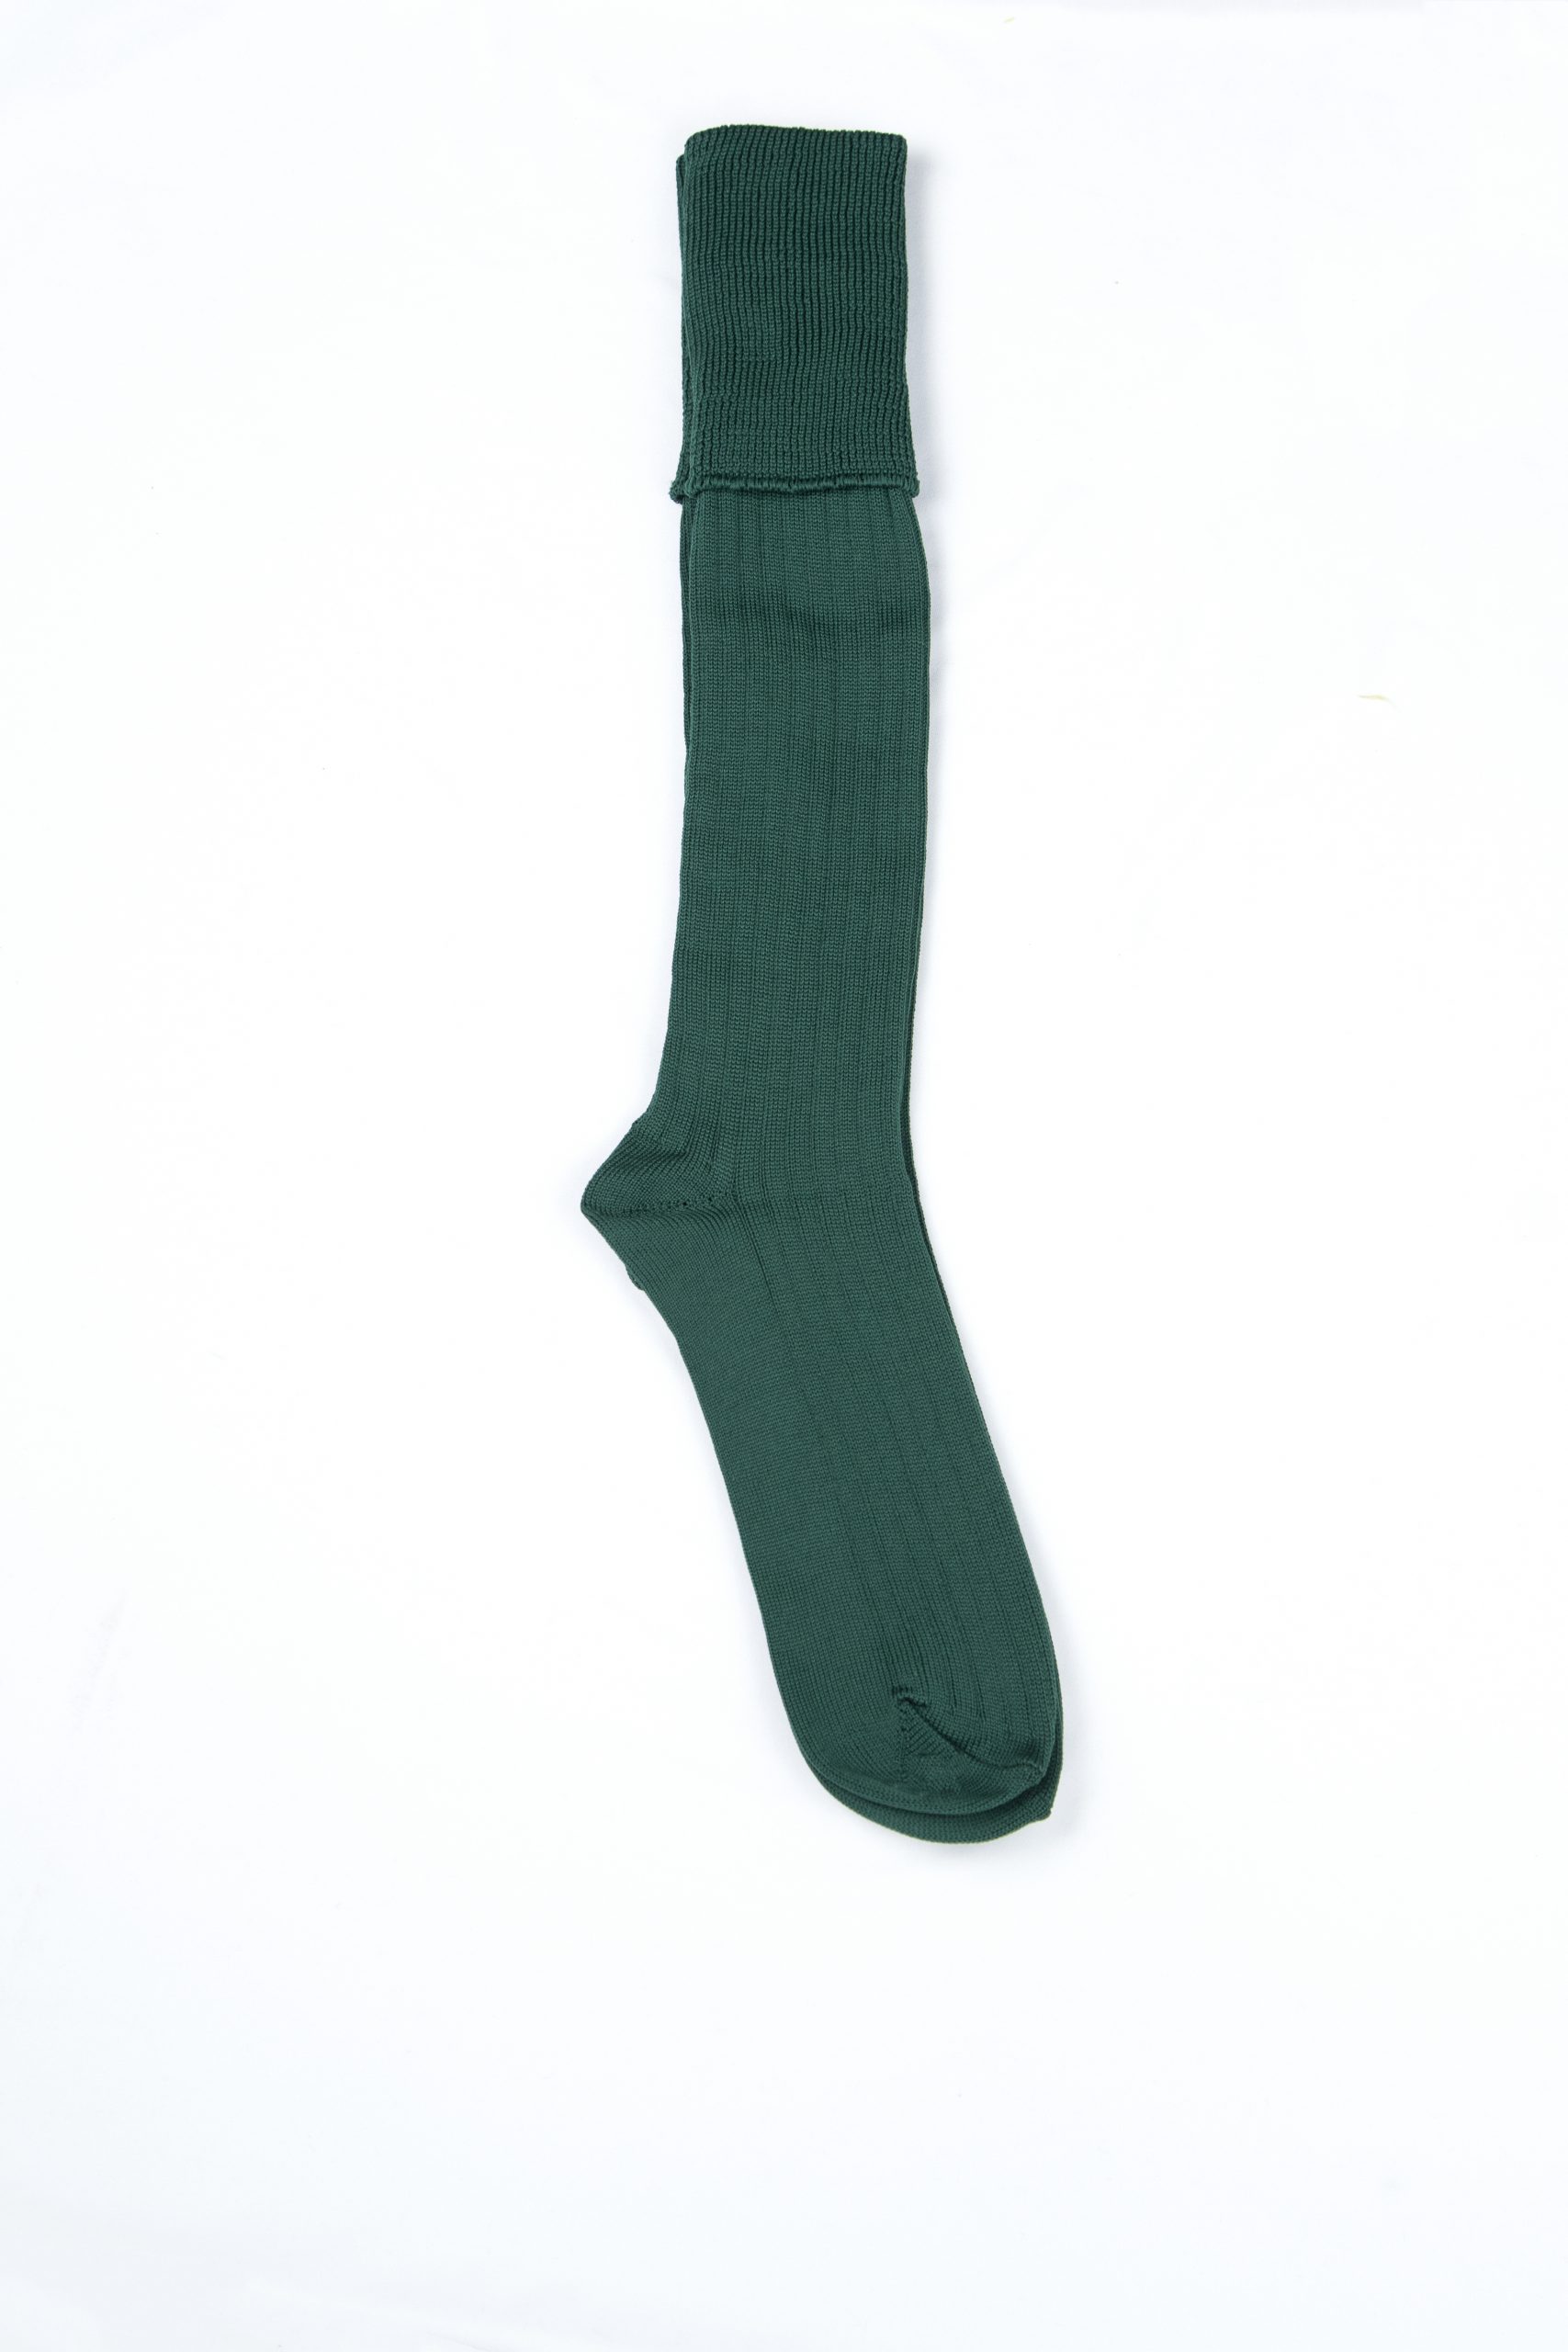 Plain Green School Socks - Suliman Jooma & Son